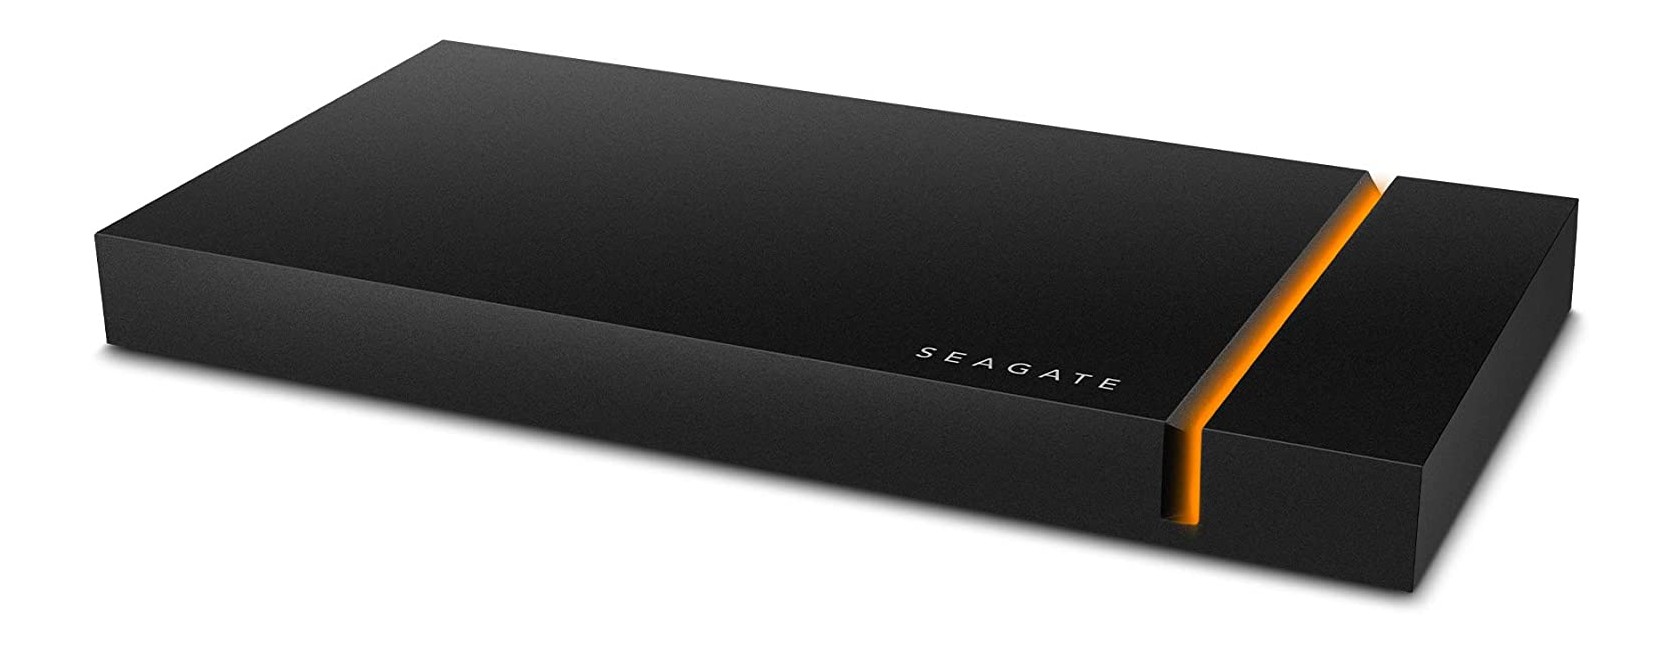 Seagate - FireCuda Gaming SSD 500GB